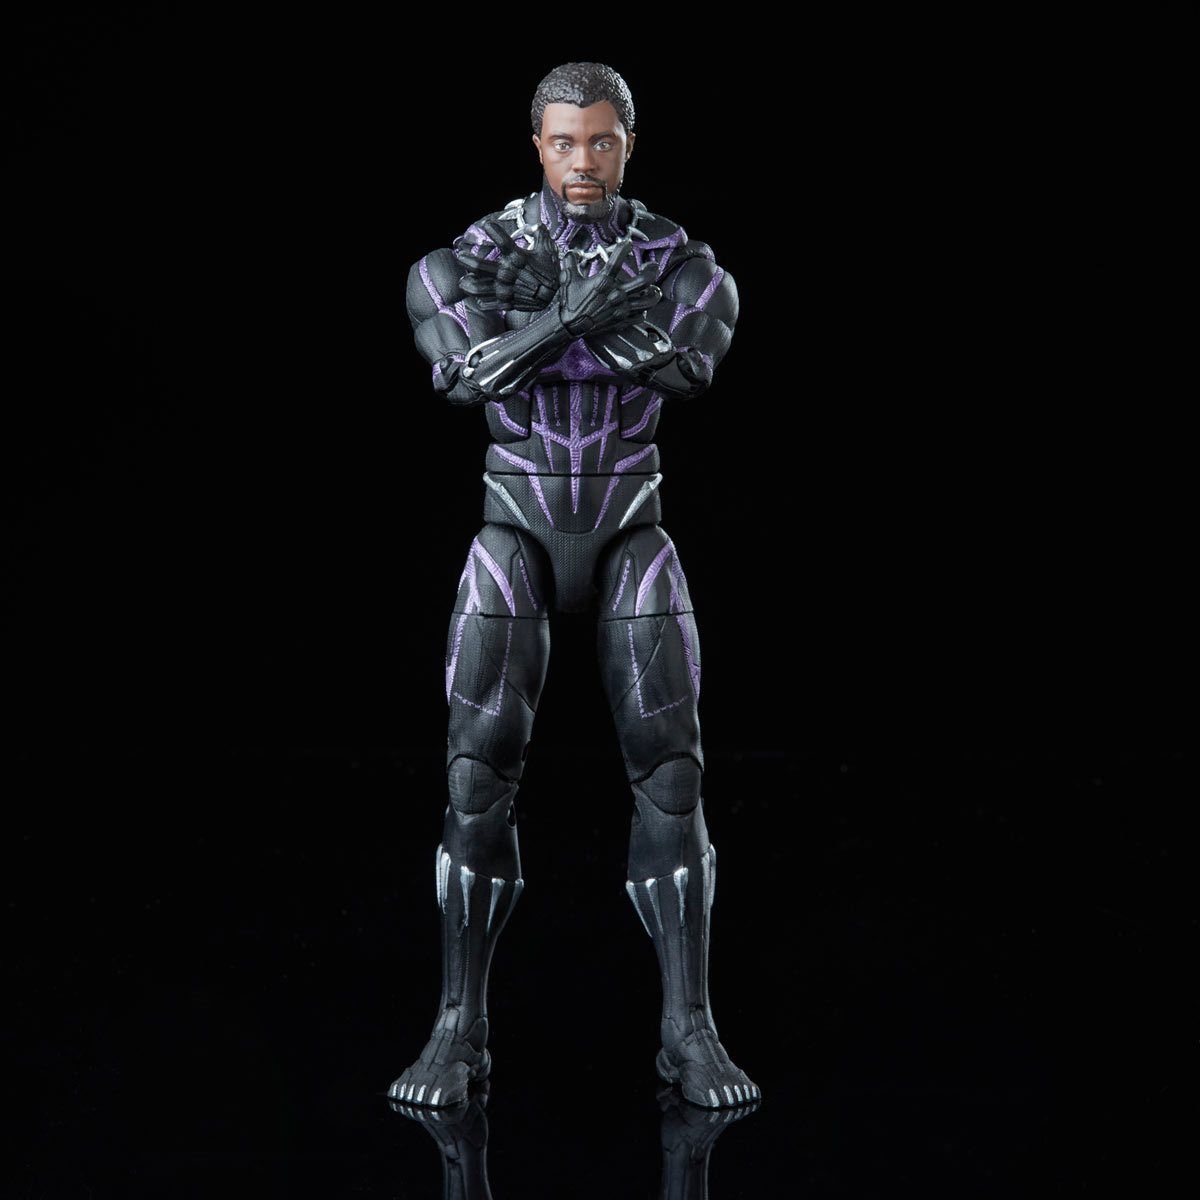 New Black Panther Marvel Legends Figures Available For Pre-Order